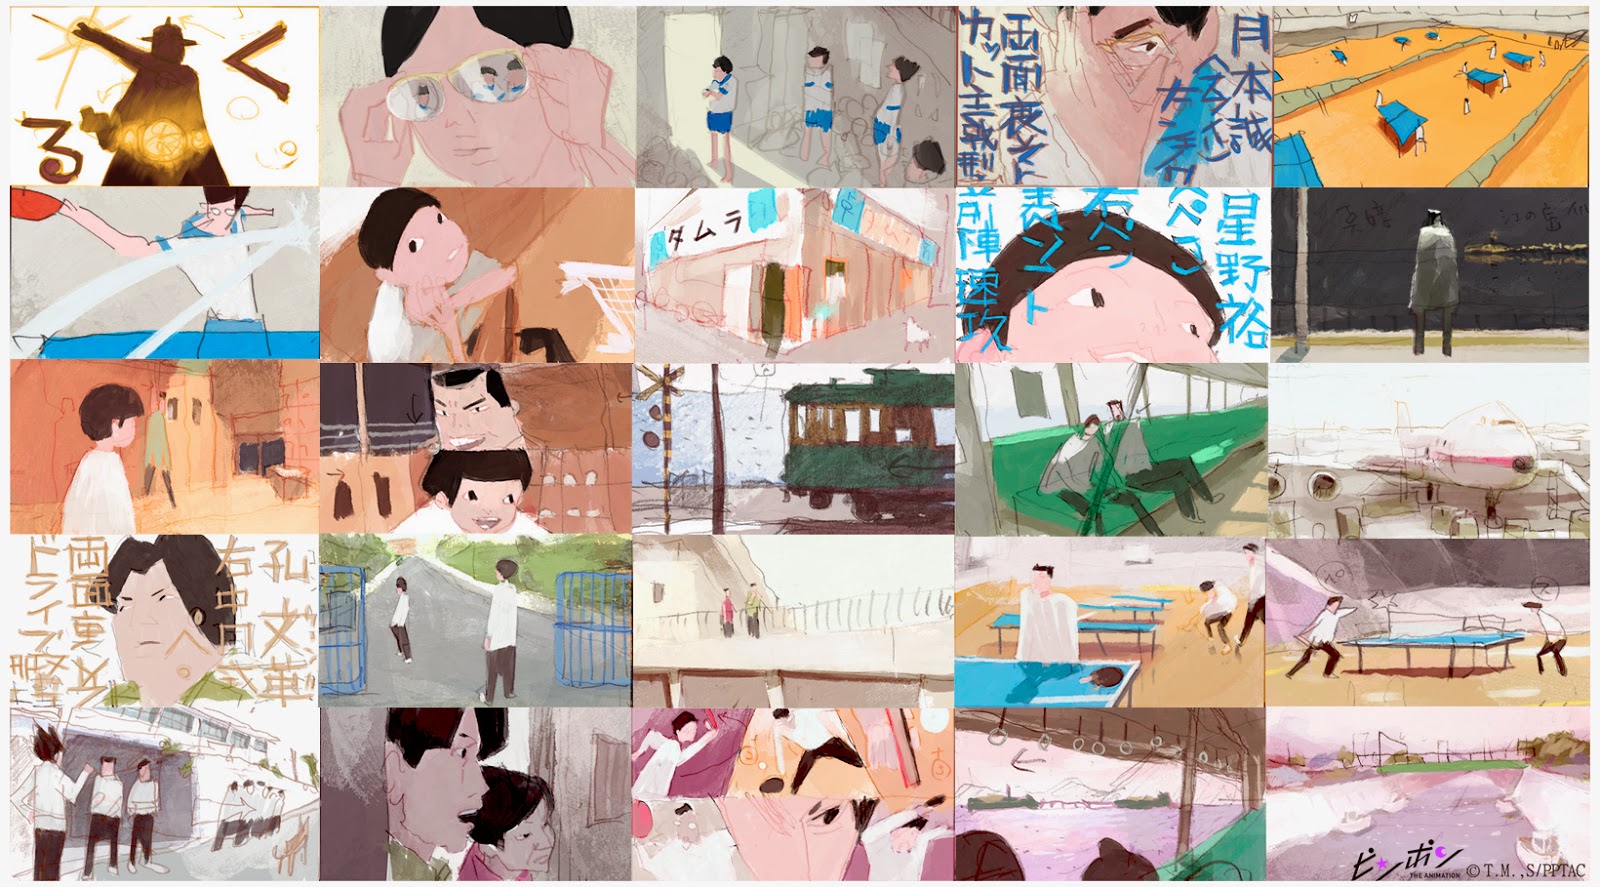 SPRING TRAINING MONTH #1: Ping Pong: The Animation, by Masaaki Yuasa (2014)  — SEVENCUT